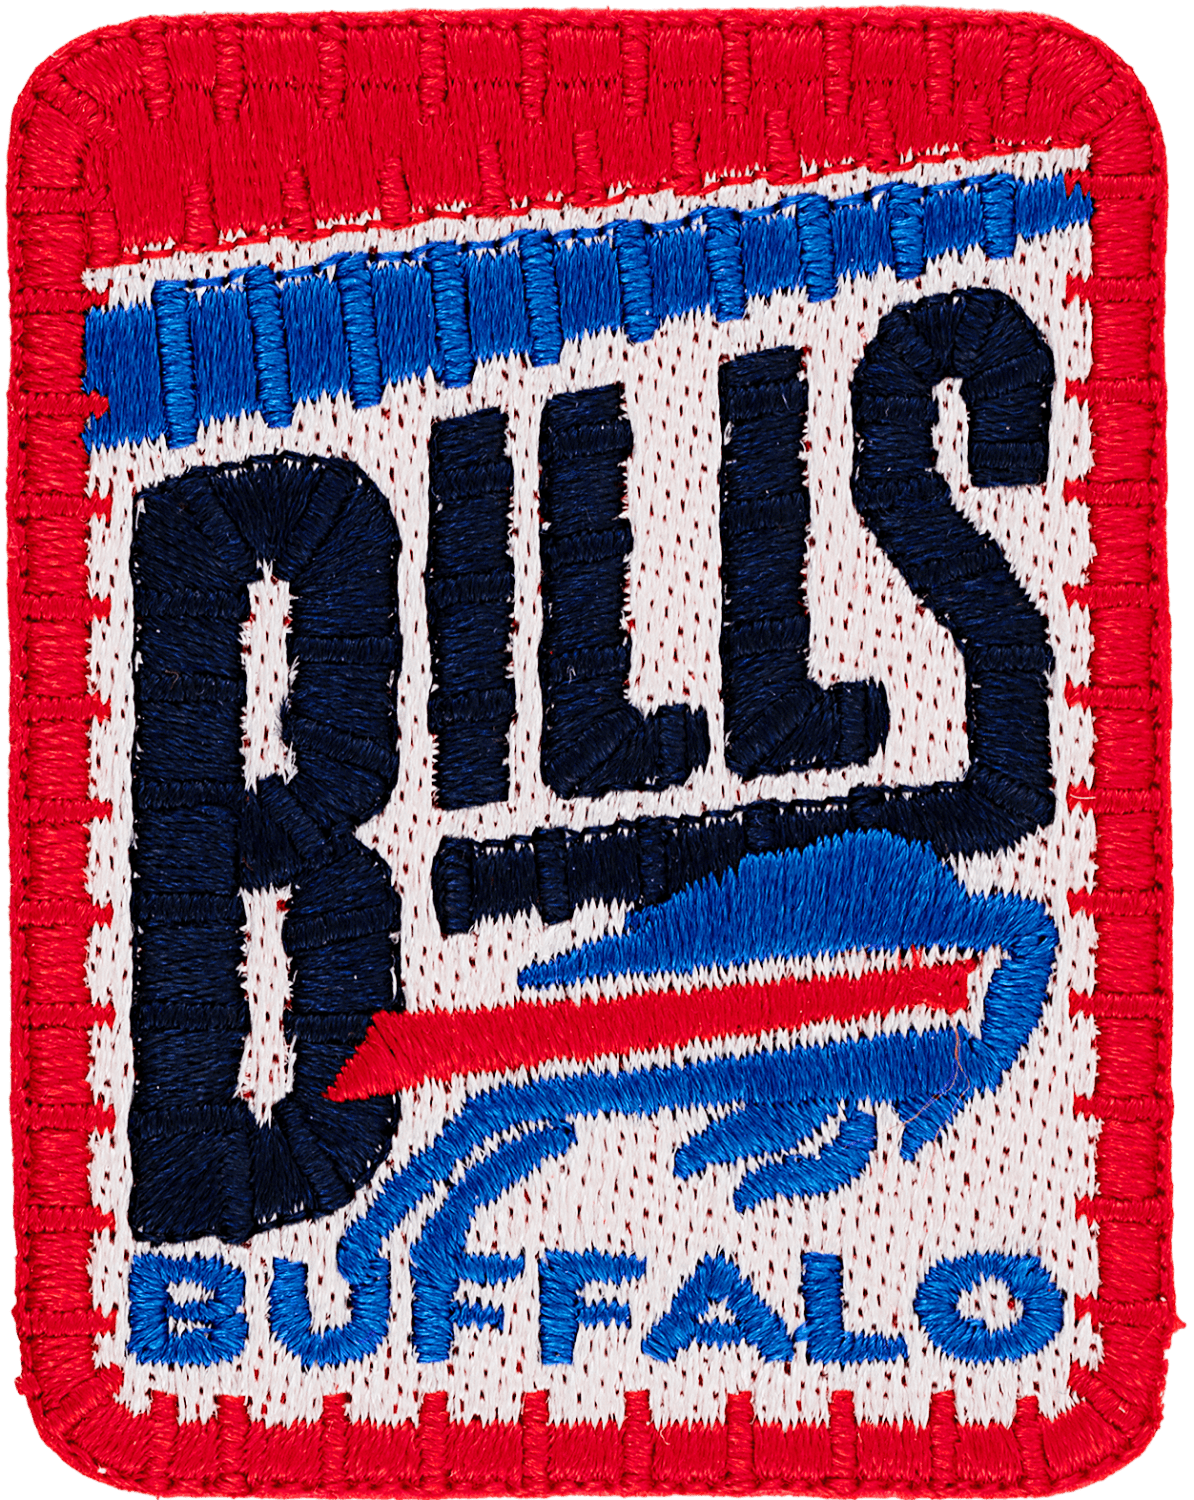 Buffalo Bills Patch, NFL Sports Team Logo, Size: 3.7 x 3.2 inches -  EmbroSoft